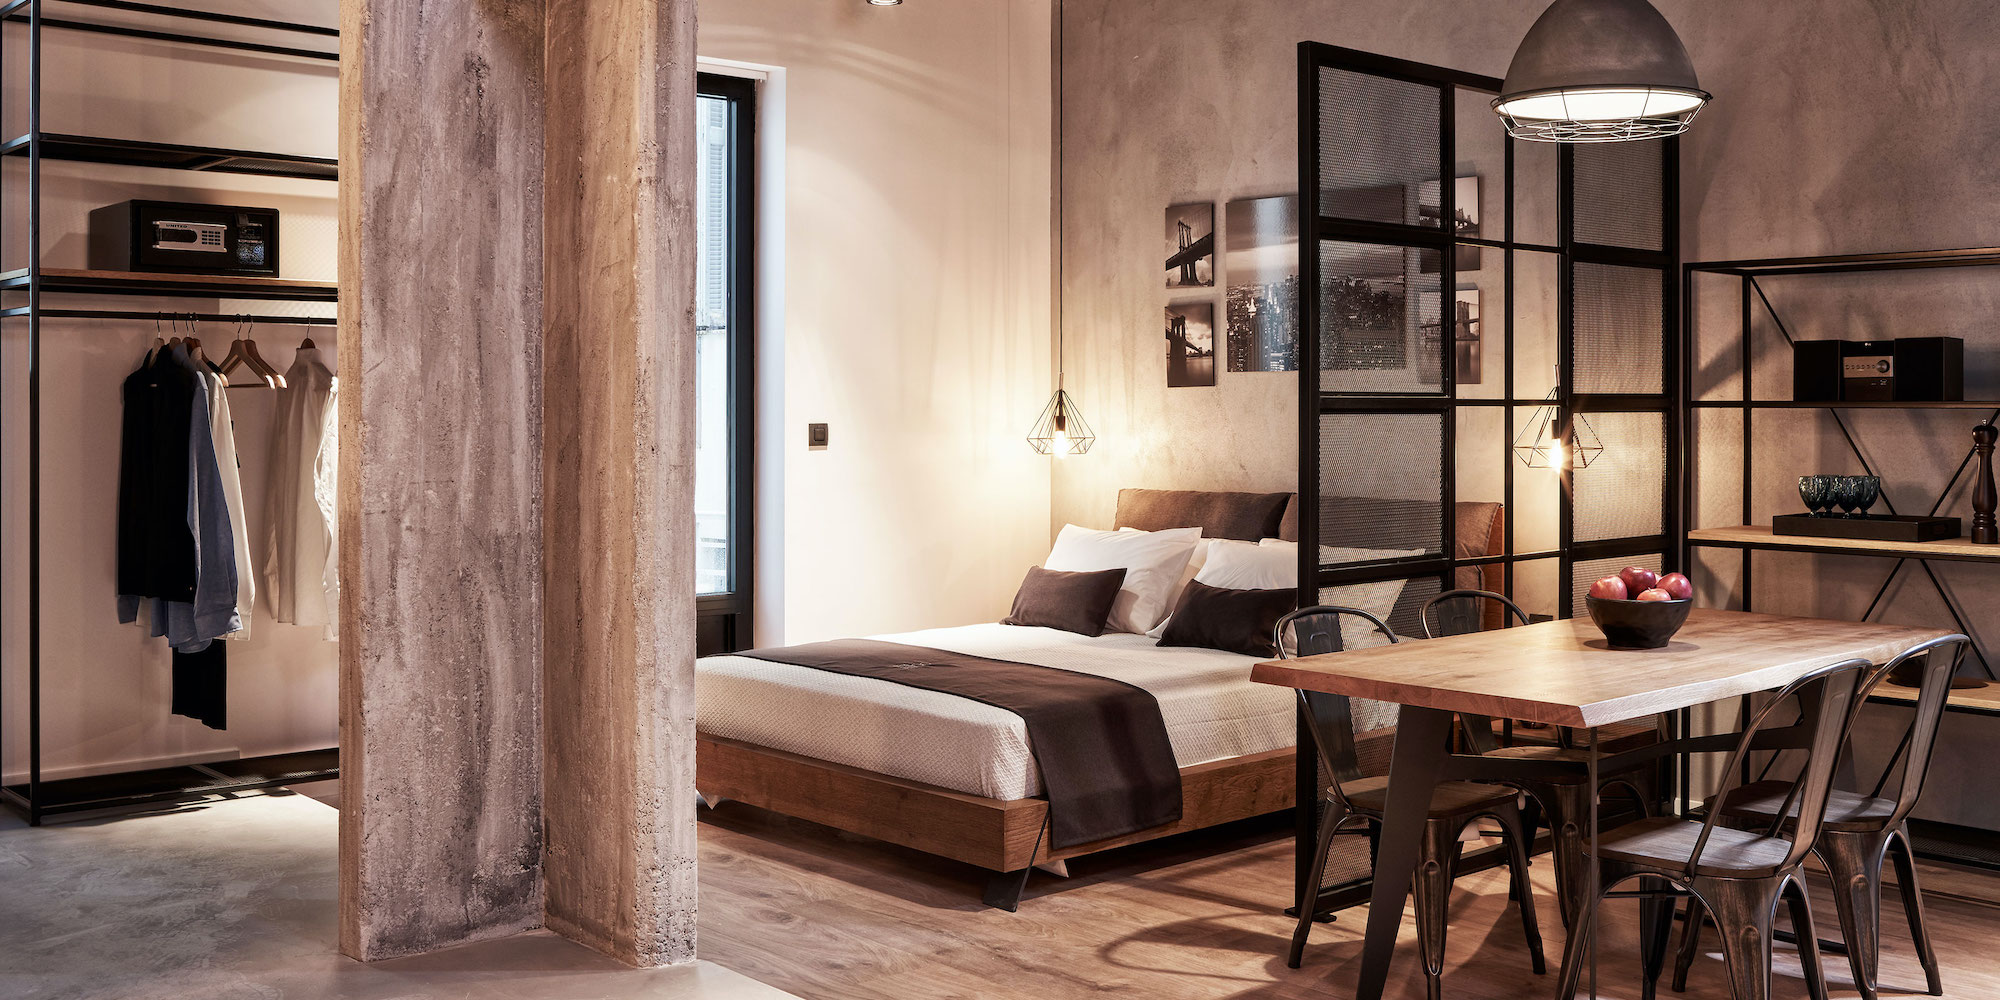 best hotels in athens: Kolonaki 8 bedroom details